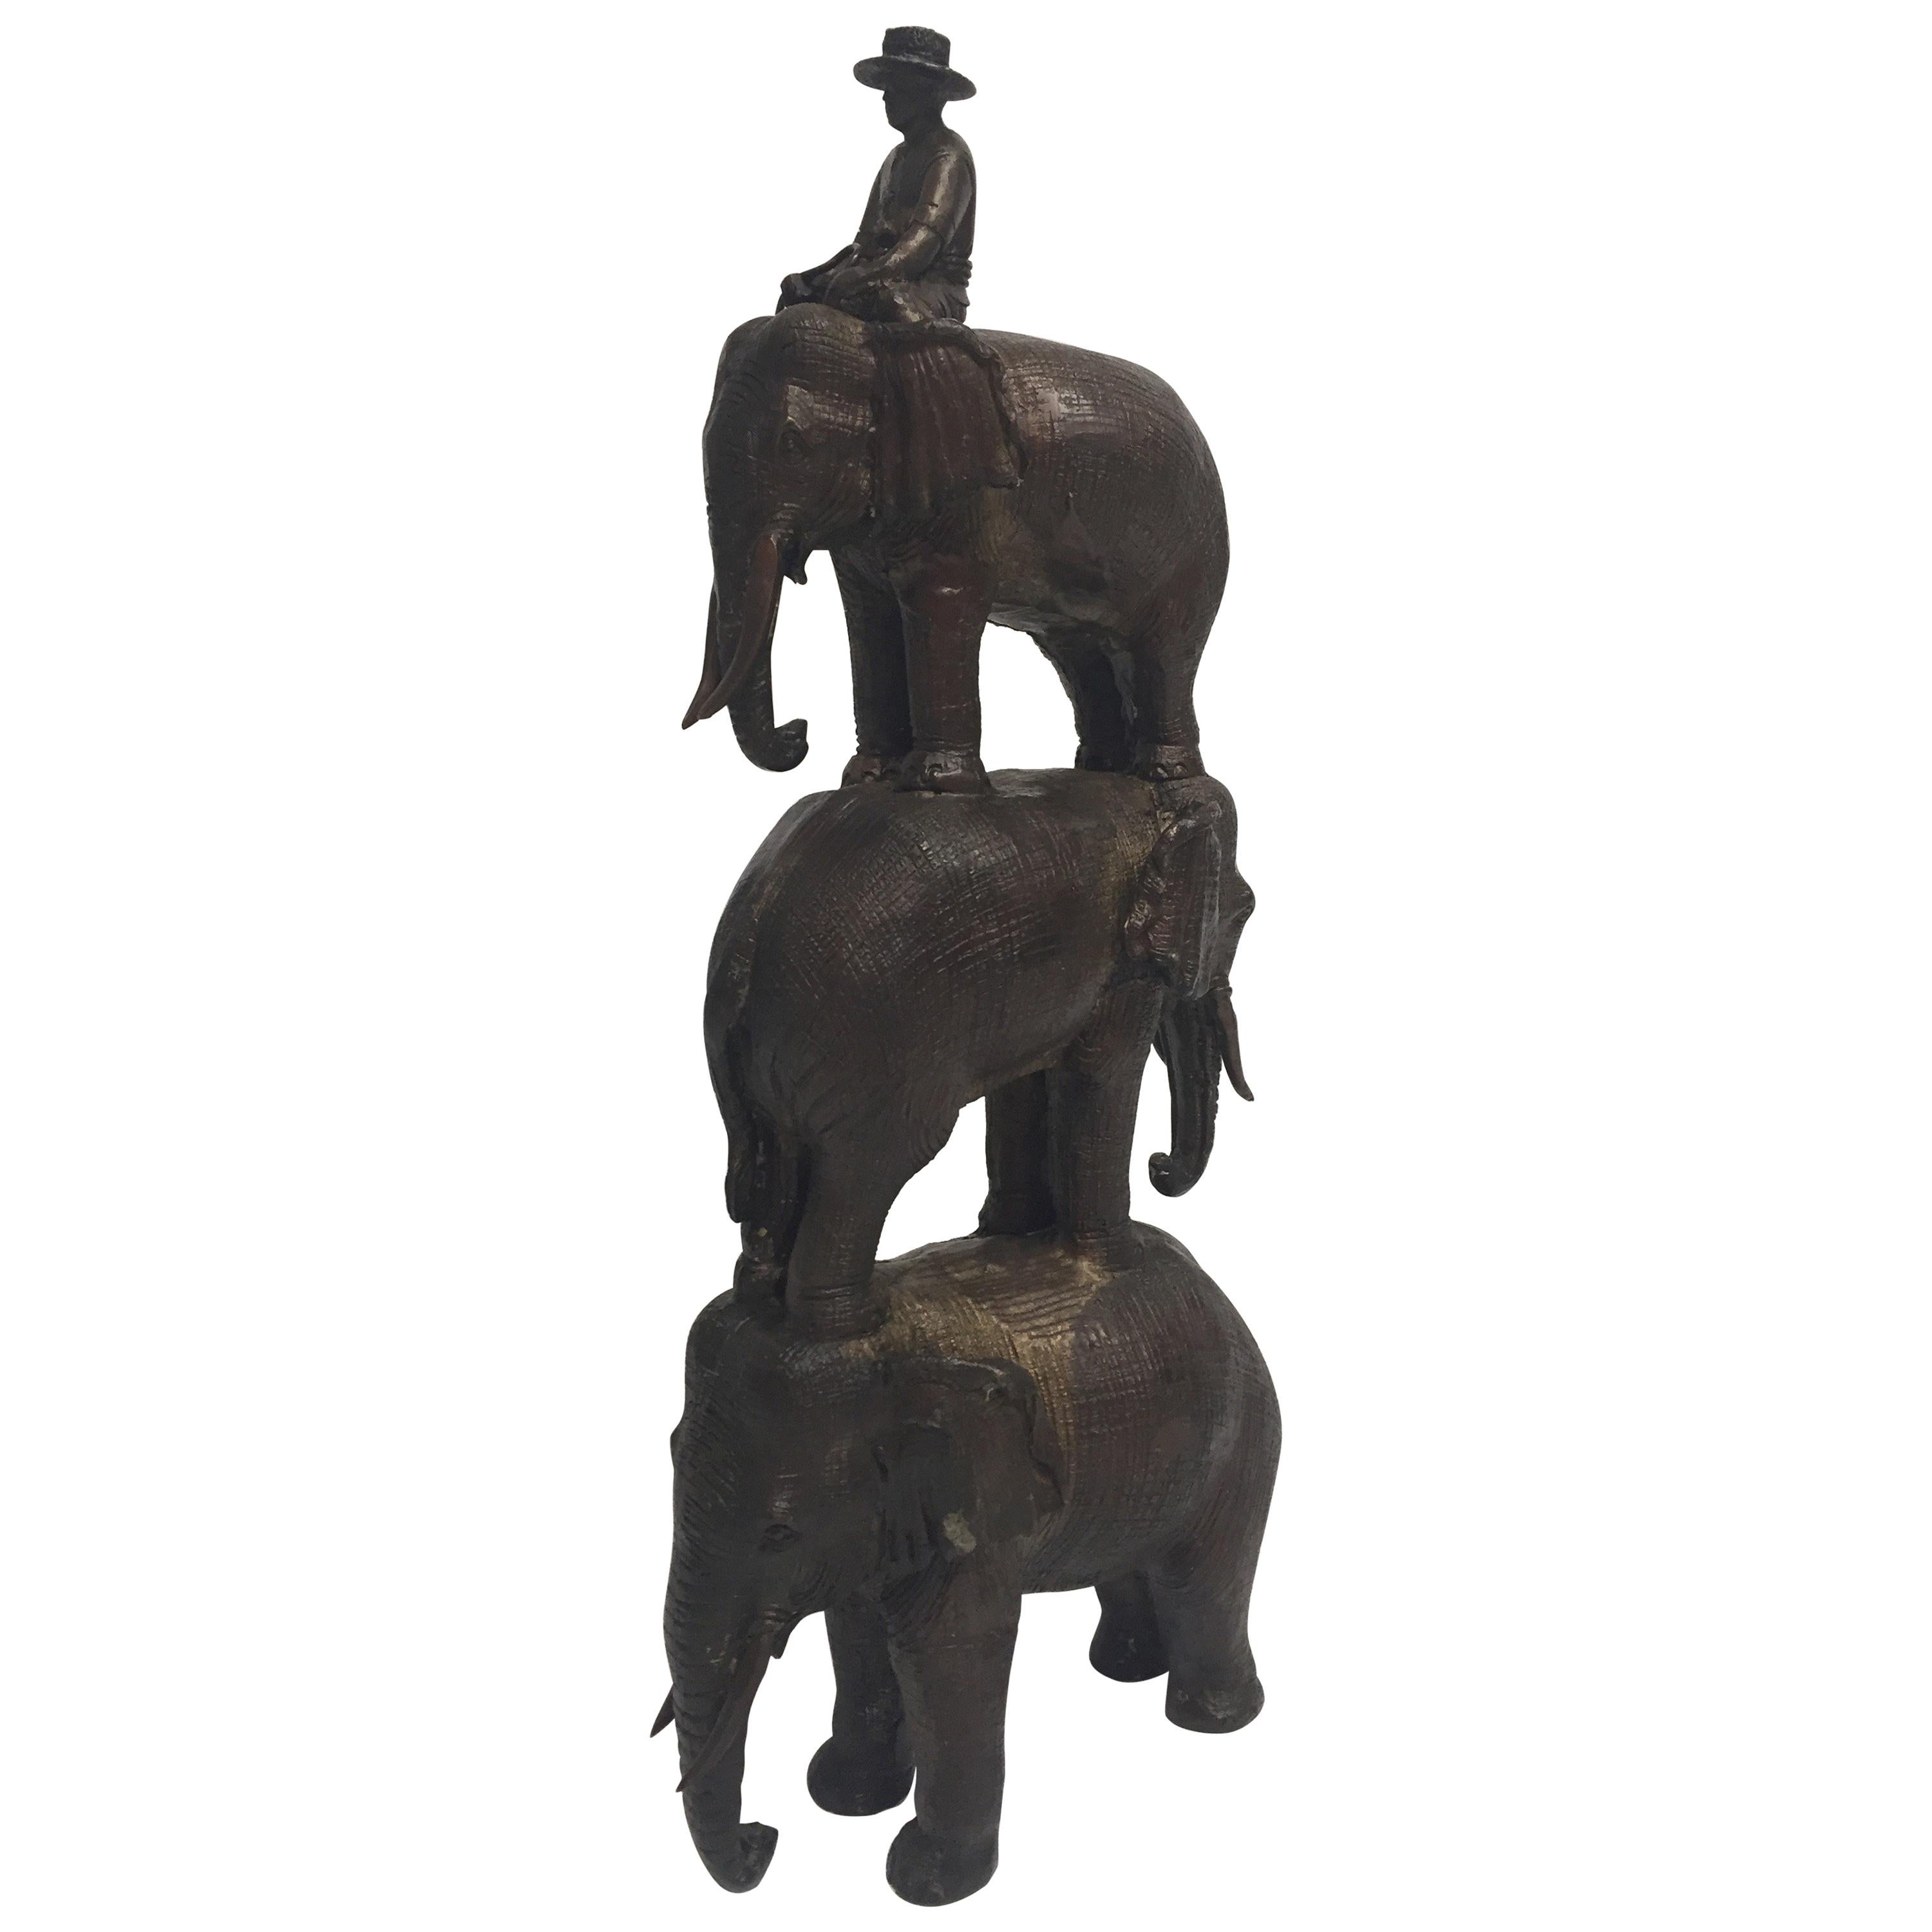 Enchanting Bronze Sculpture of a Man Riding Three Elephants